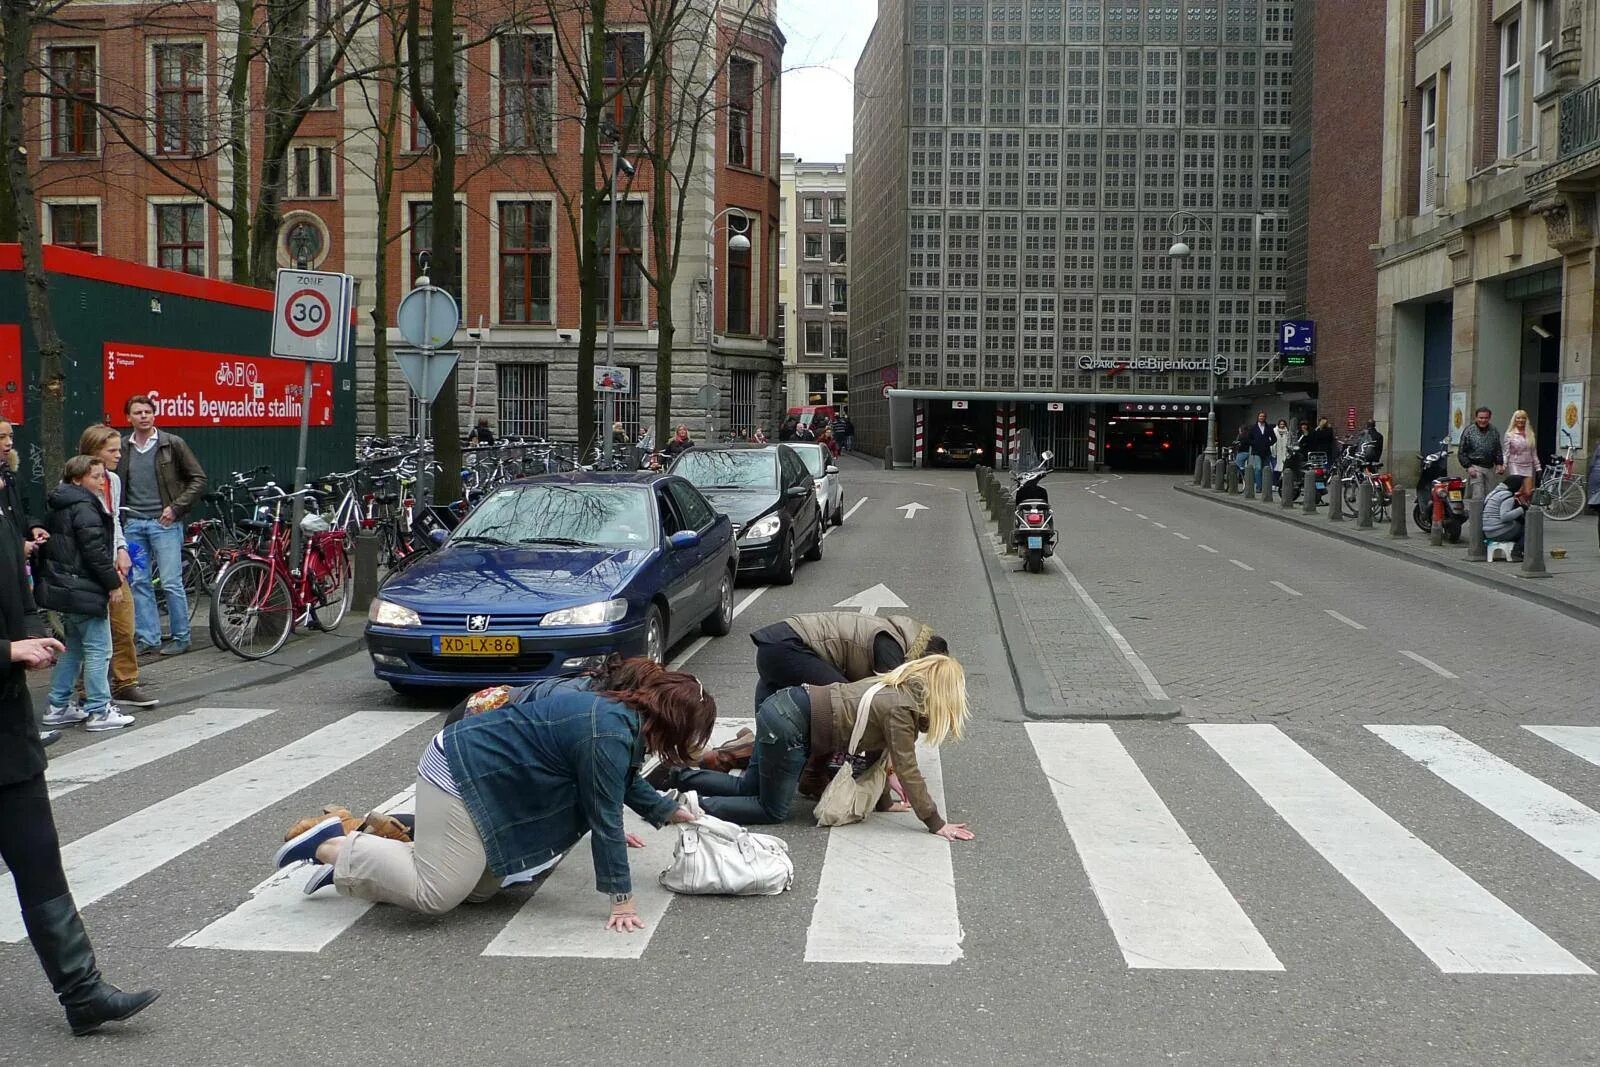 Strange picture. Необычные ситуации. Странная ситуация. Смешные ситуации на улице. Необычные ситуации на дороге.